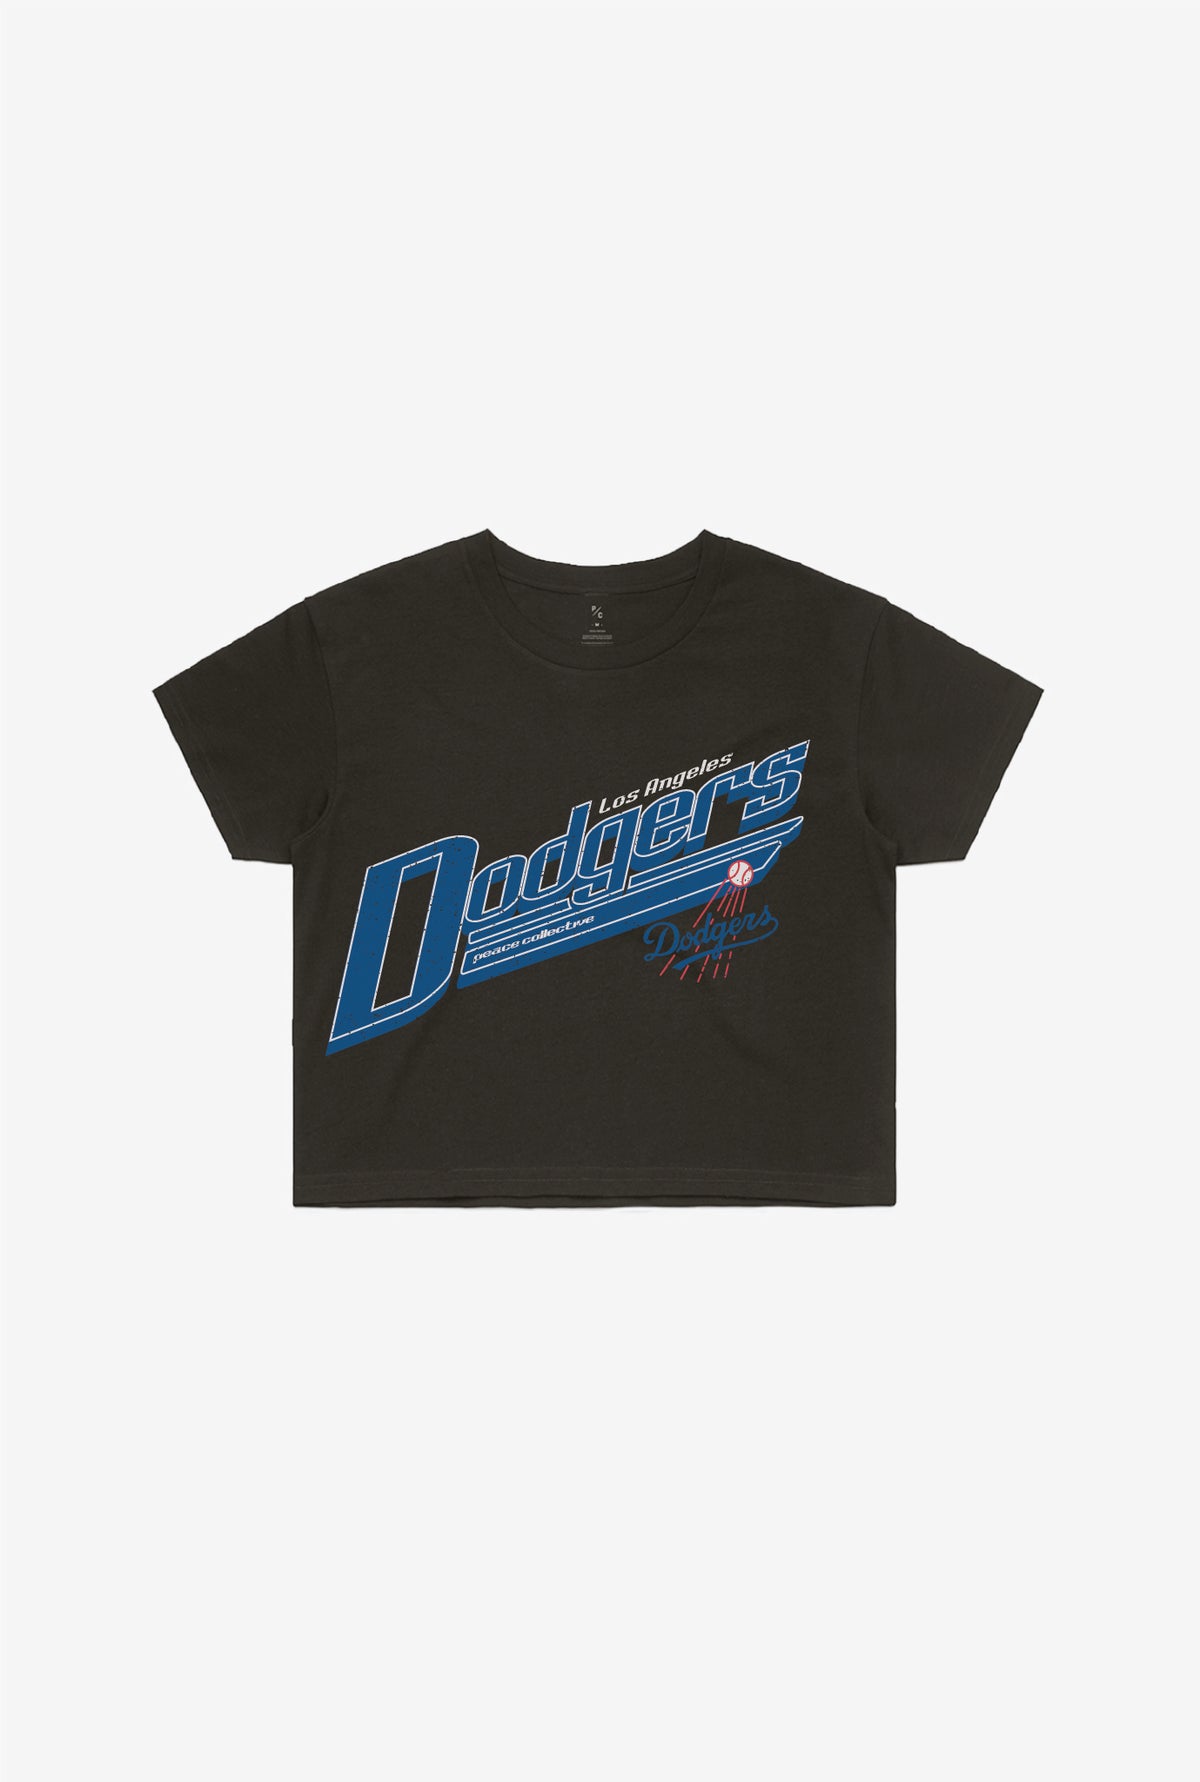 Los Angeles Dodgers Vintage Cropped T-Shirt - Black